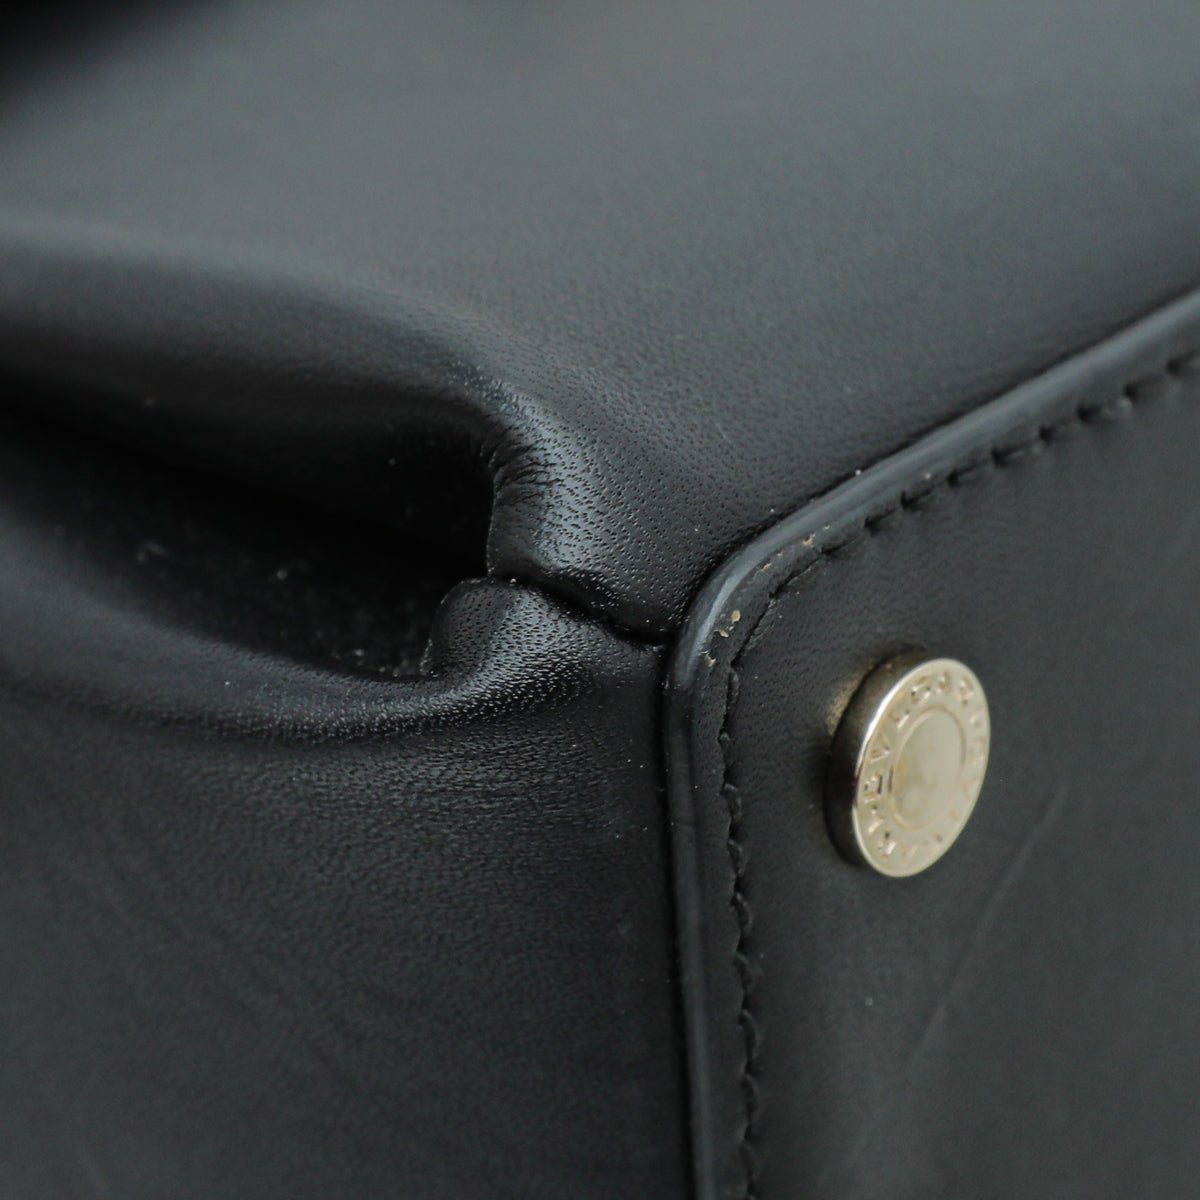 Bvlgari - Bvlgari Black Serpenti Viper Mini Top Handle Chain Bag | The Closet